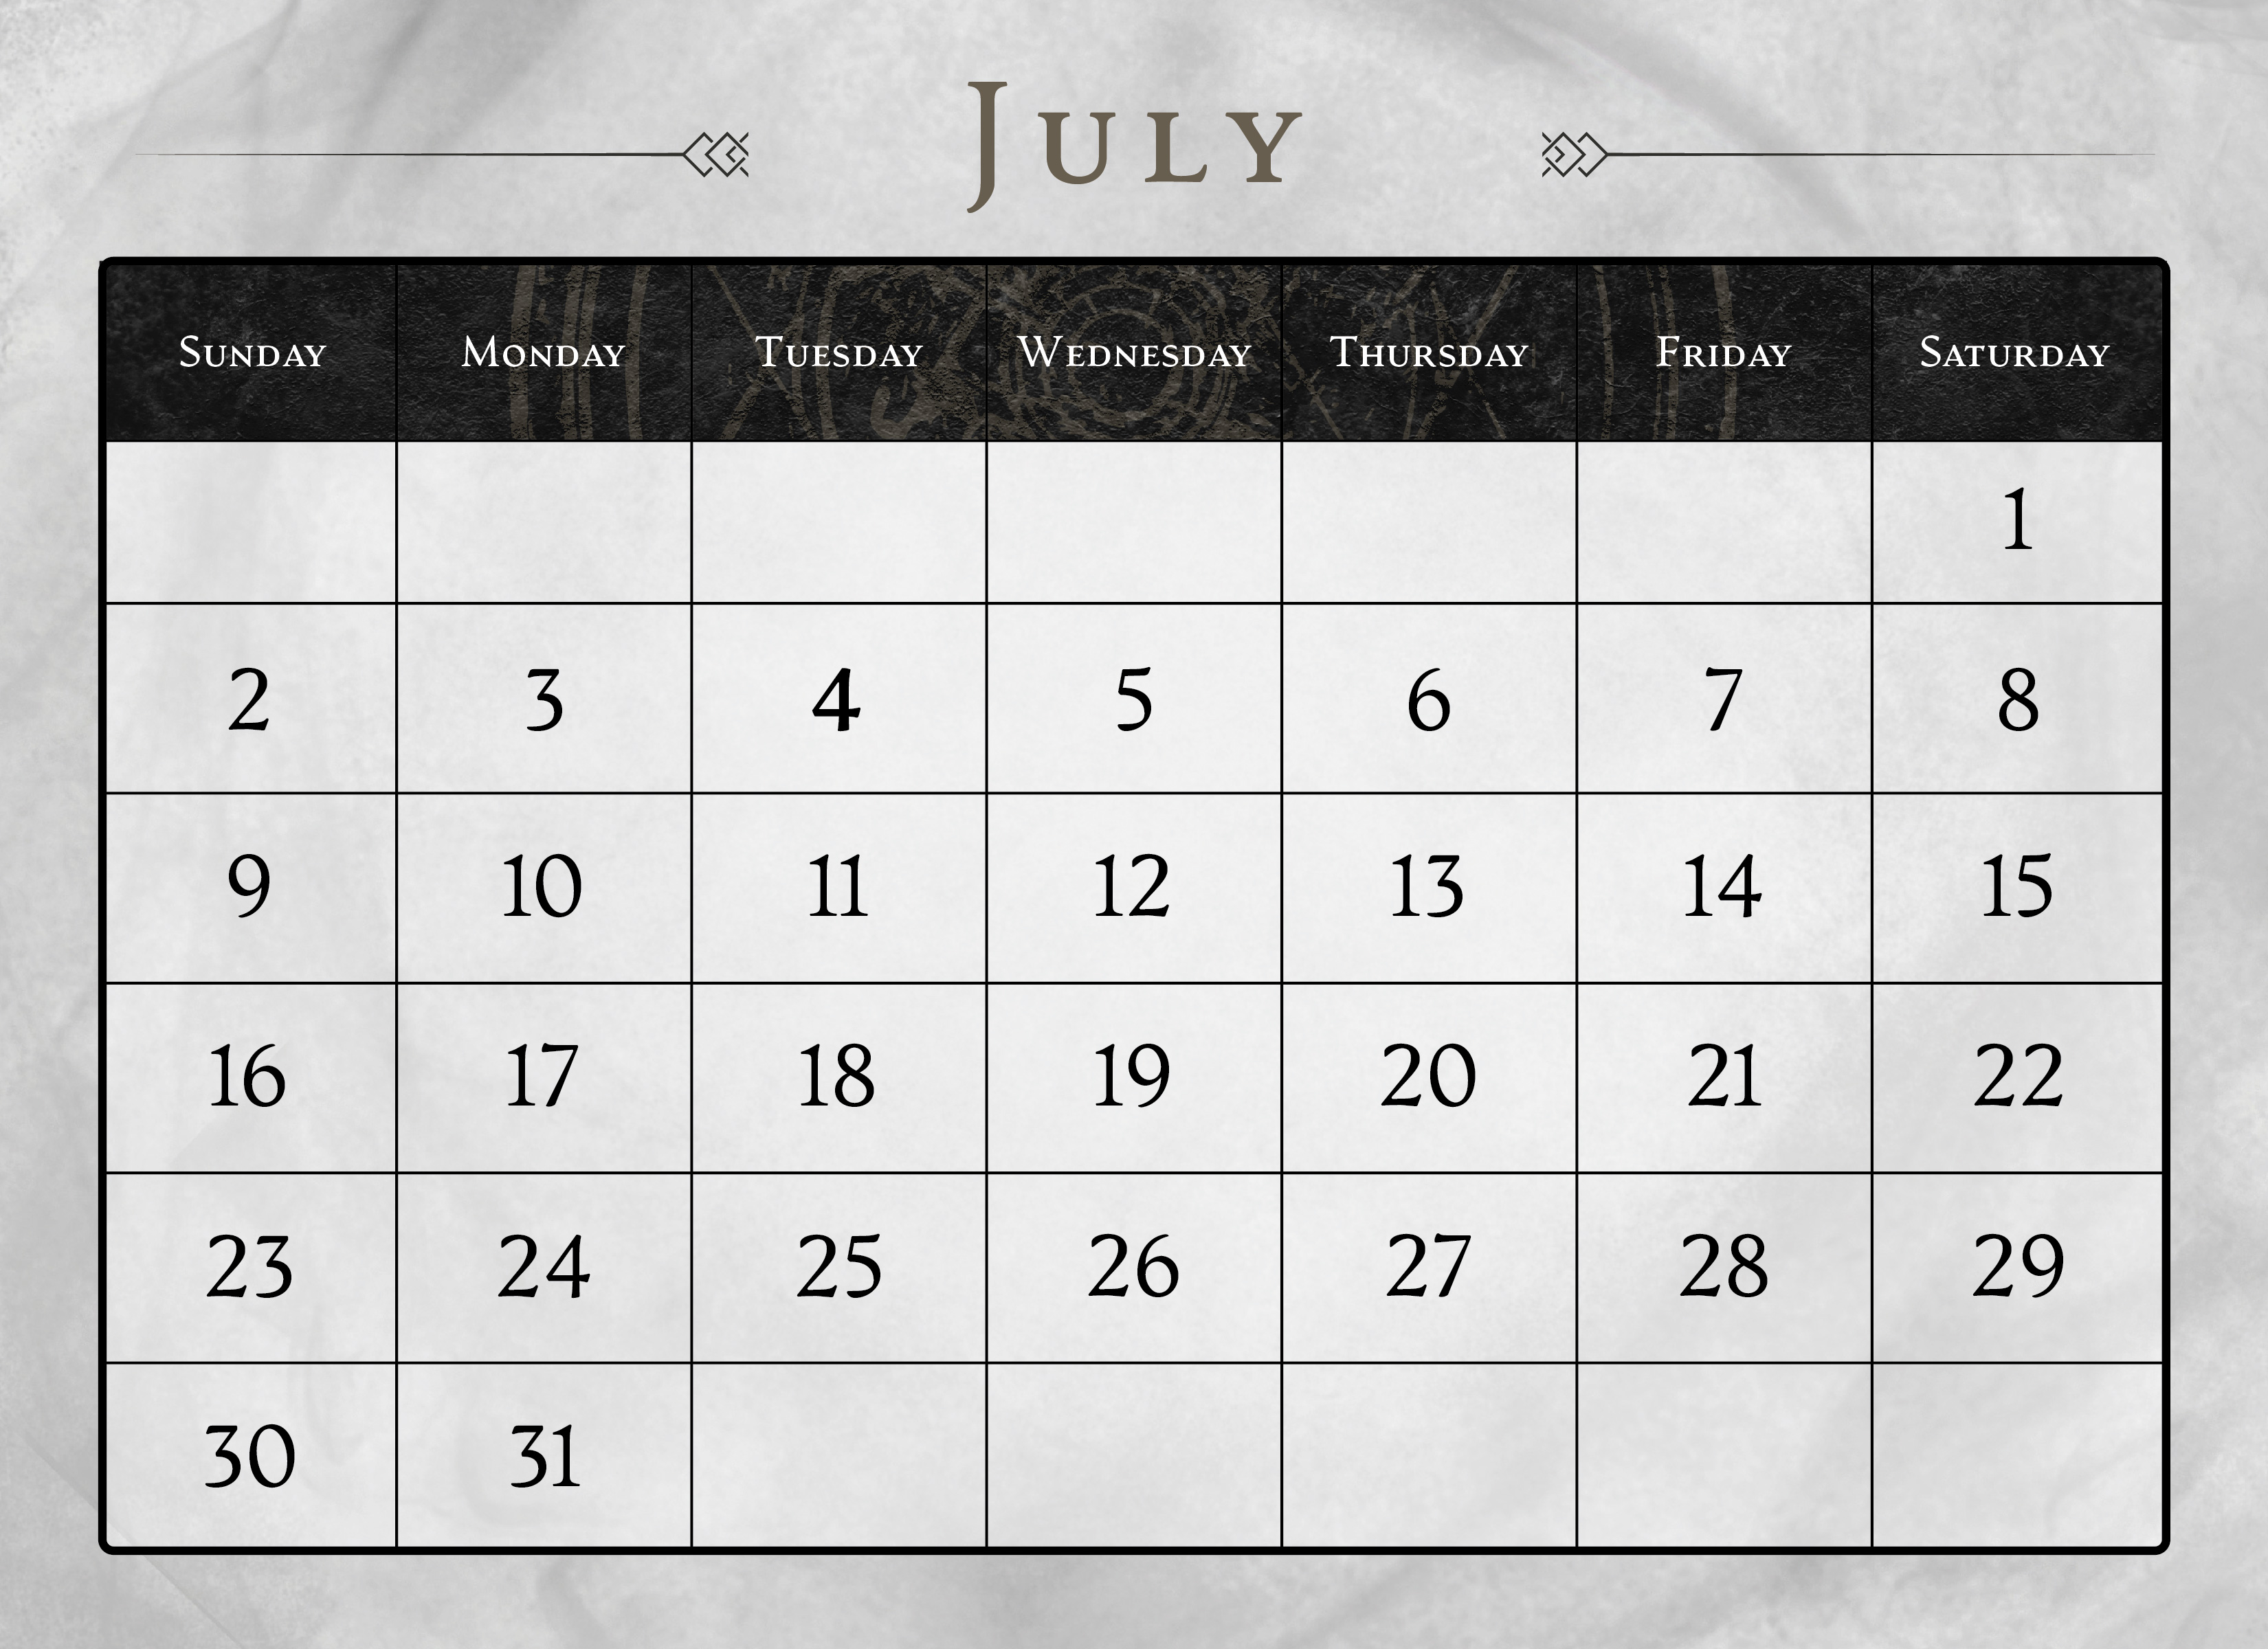 7 dates July